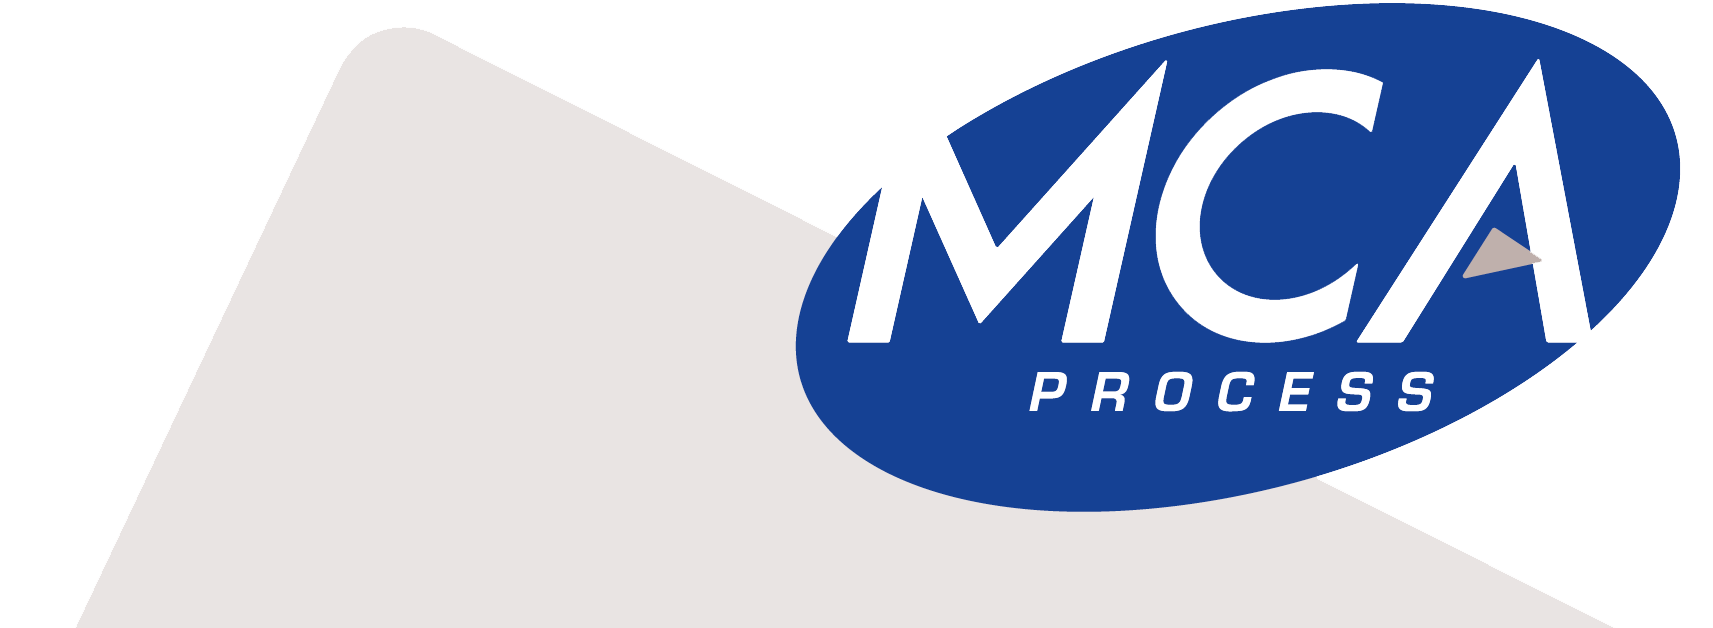 footer-logo-mca